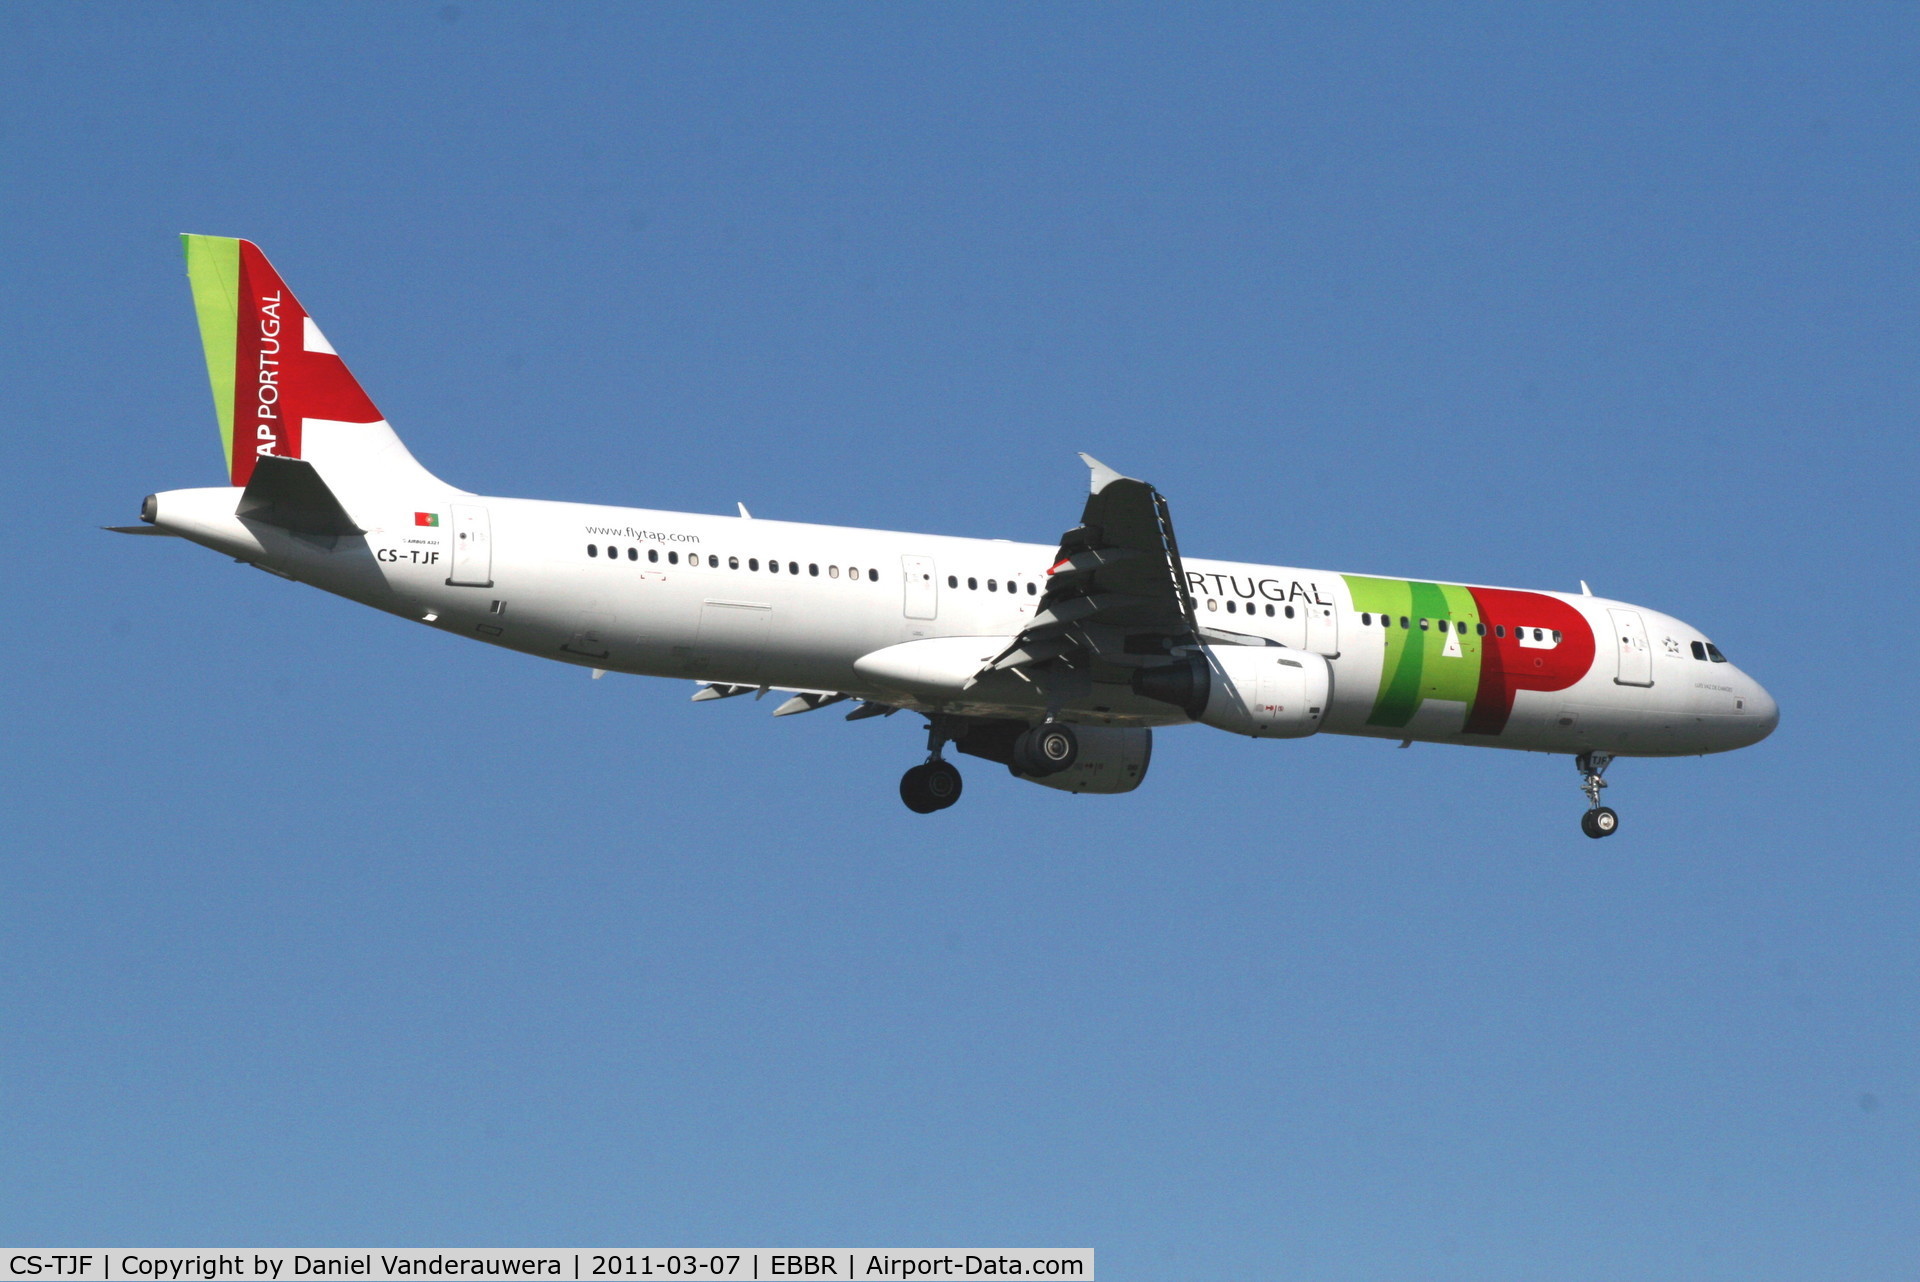 CS-TJF, 2000 Airbus A321-211 C/N 1399, Arrival of flight TP604 to RWY 02